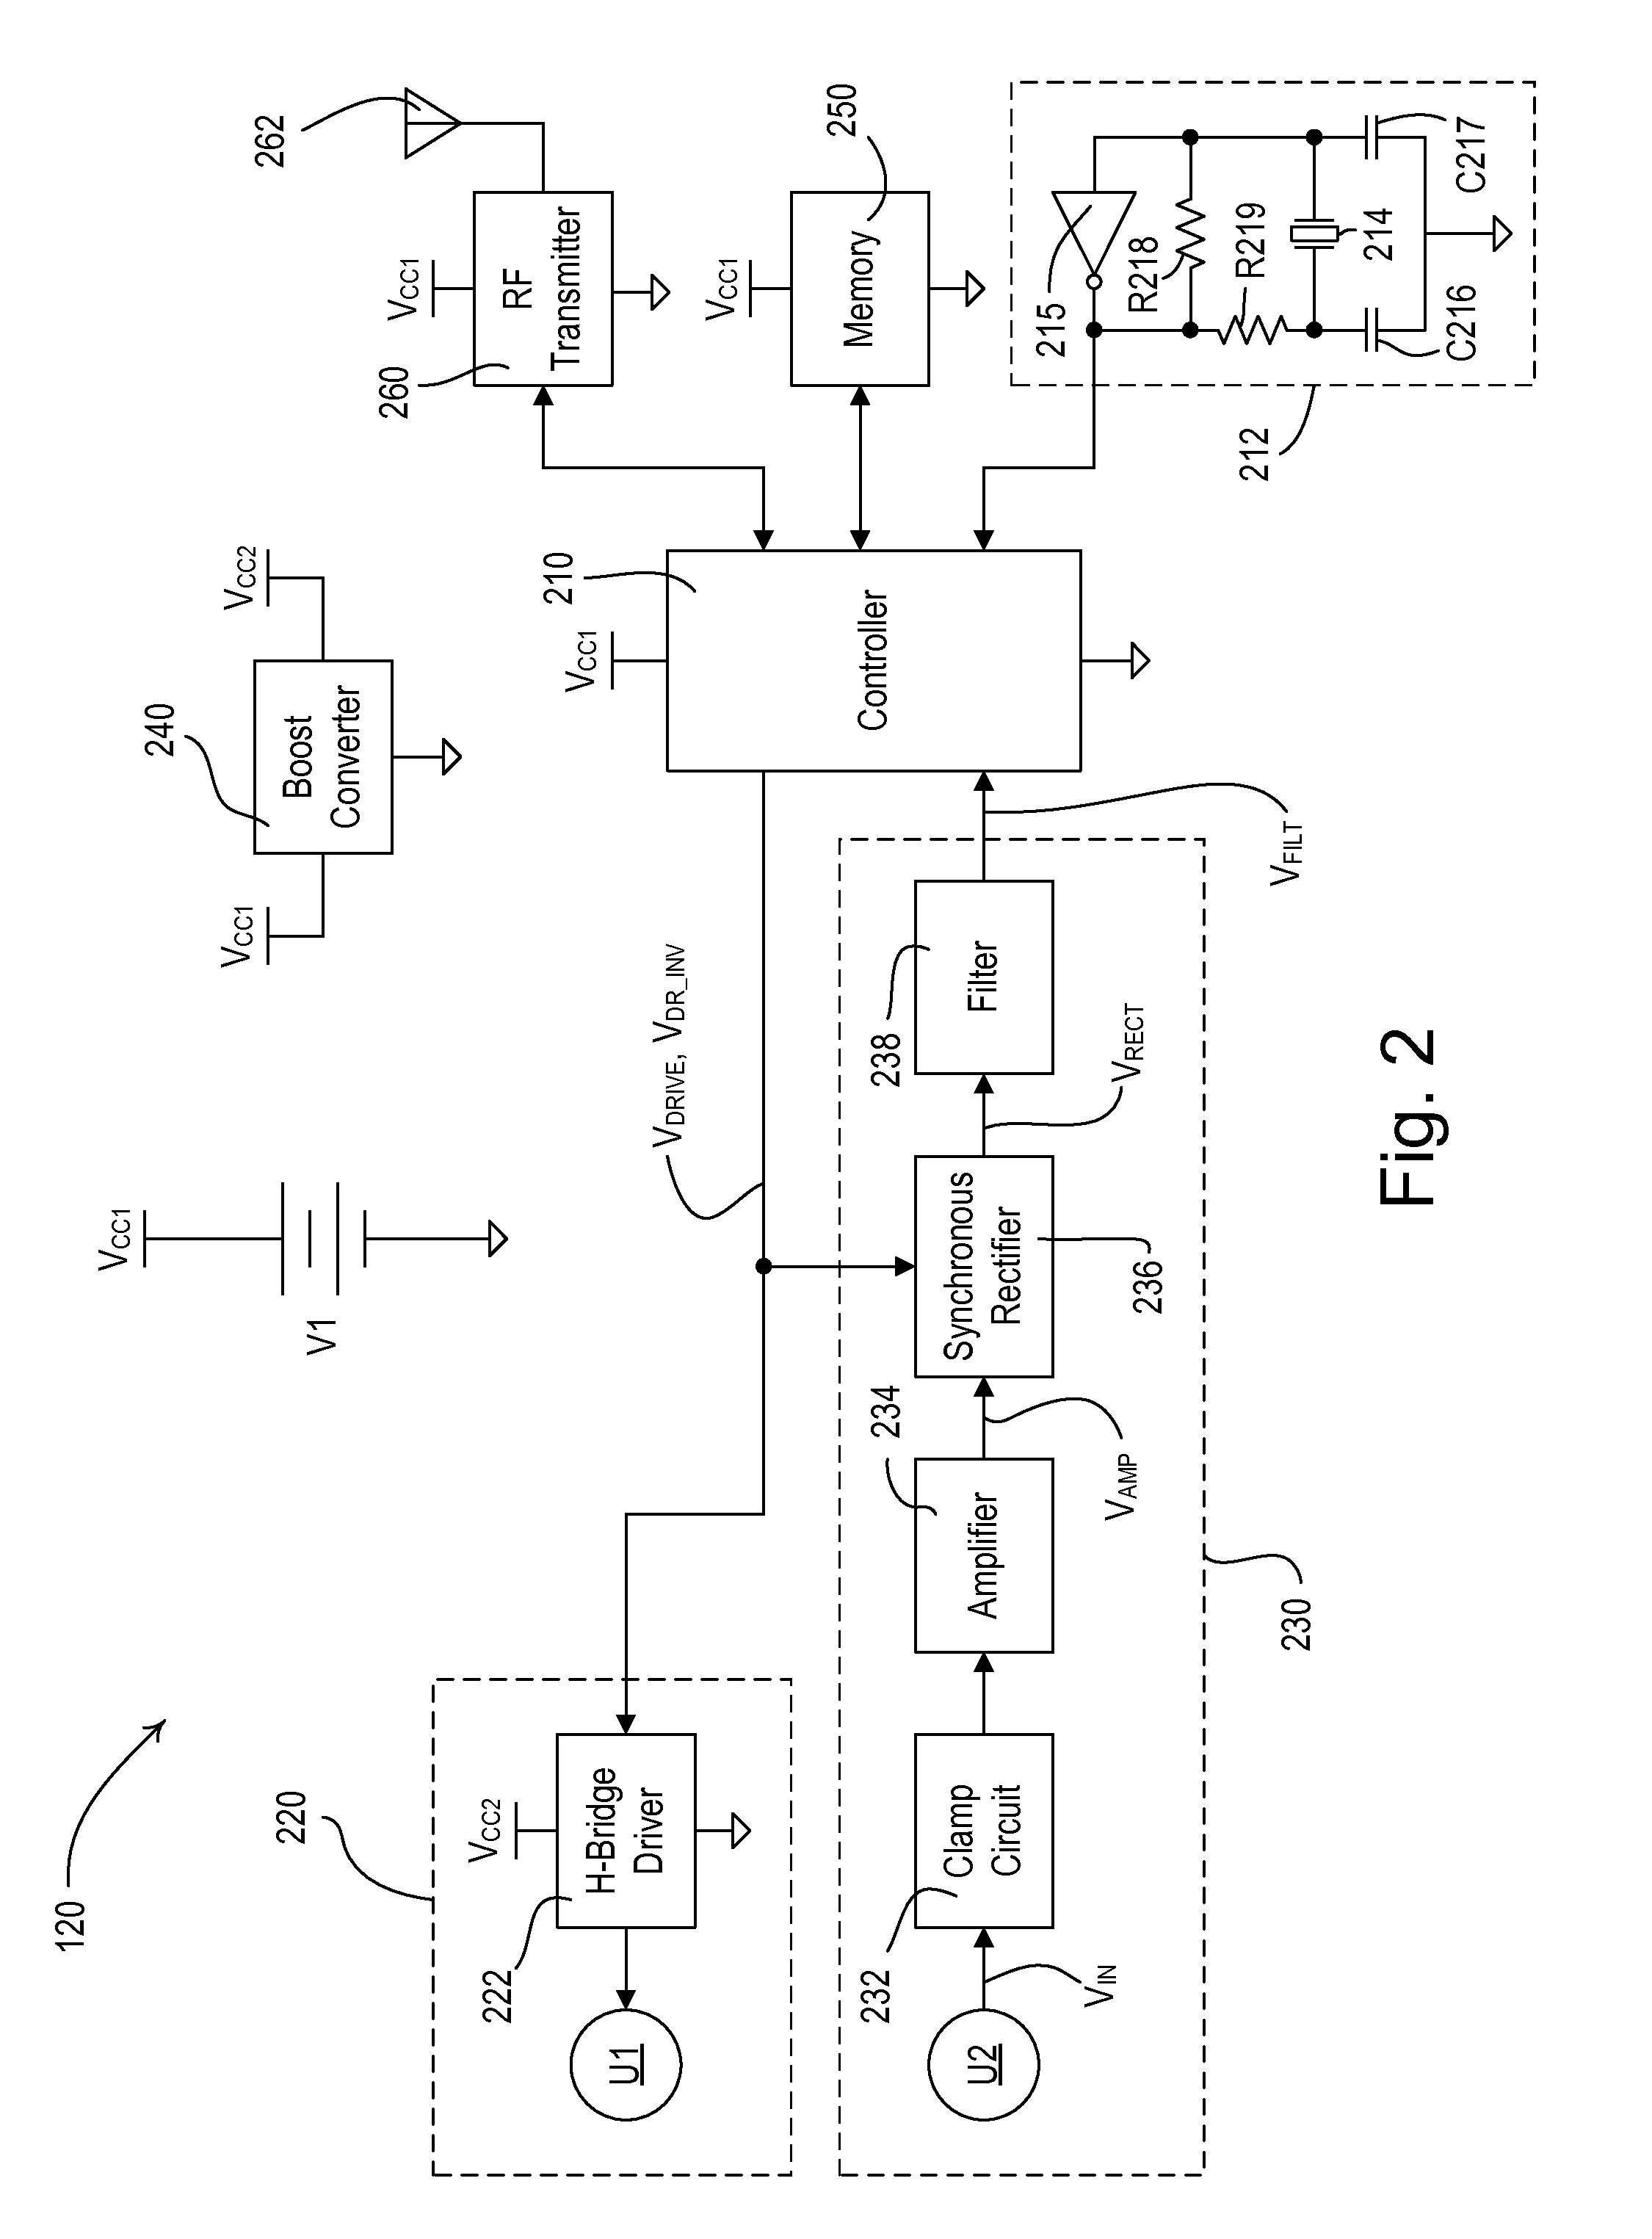 Ultrasonic receiving circuit